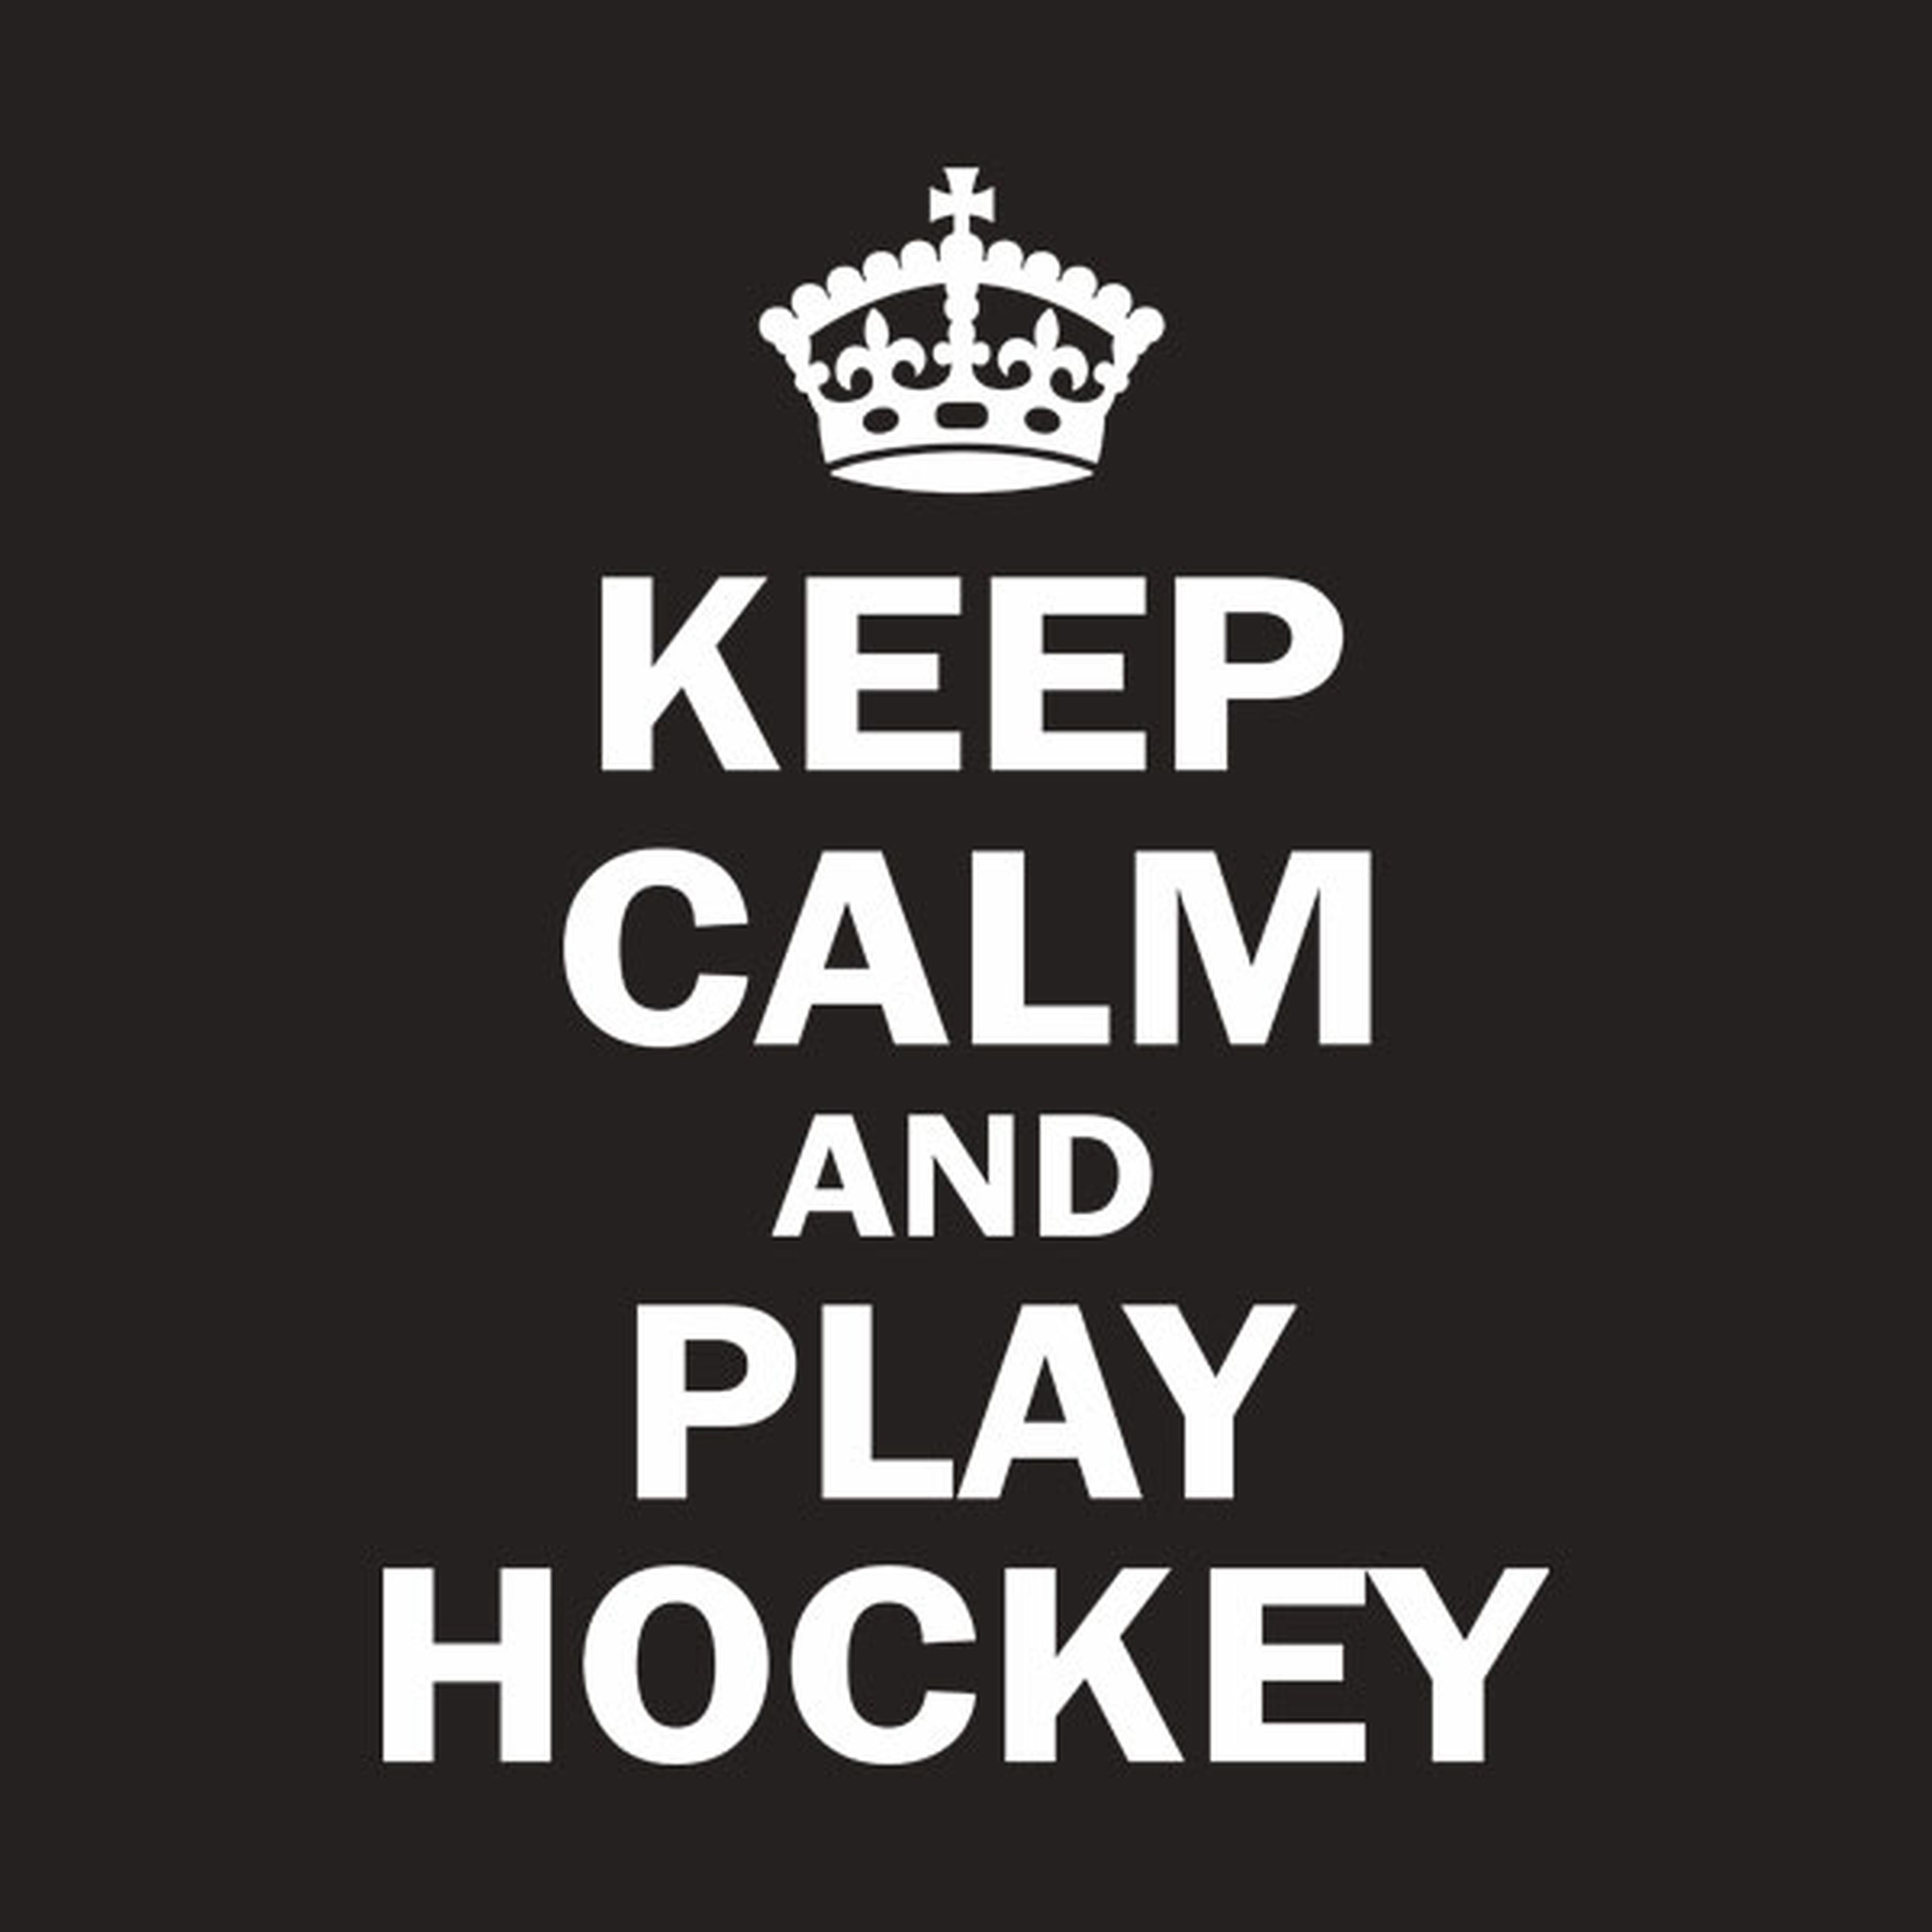 Keep calm and play hockey - T-shirt